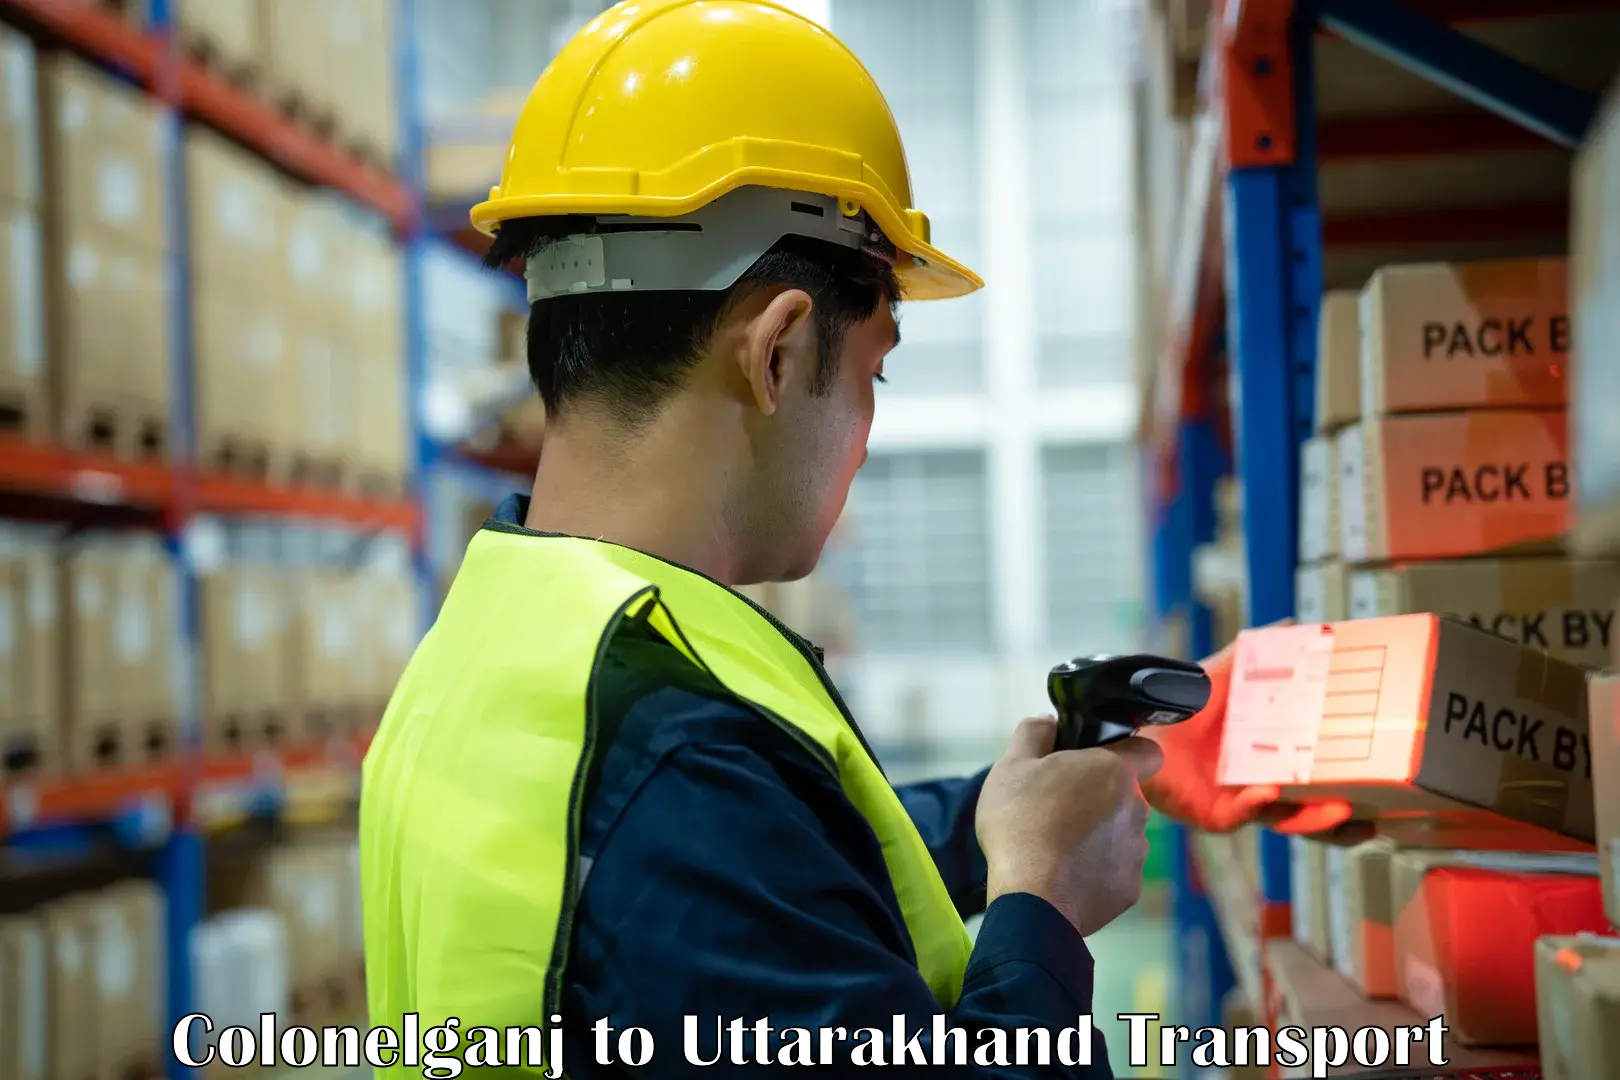 Truck transport companies in India Colonelganj to Uttarakhand